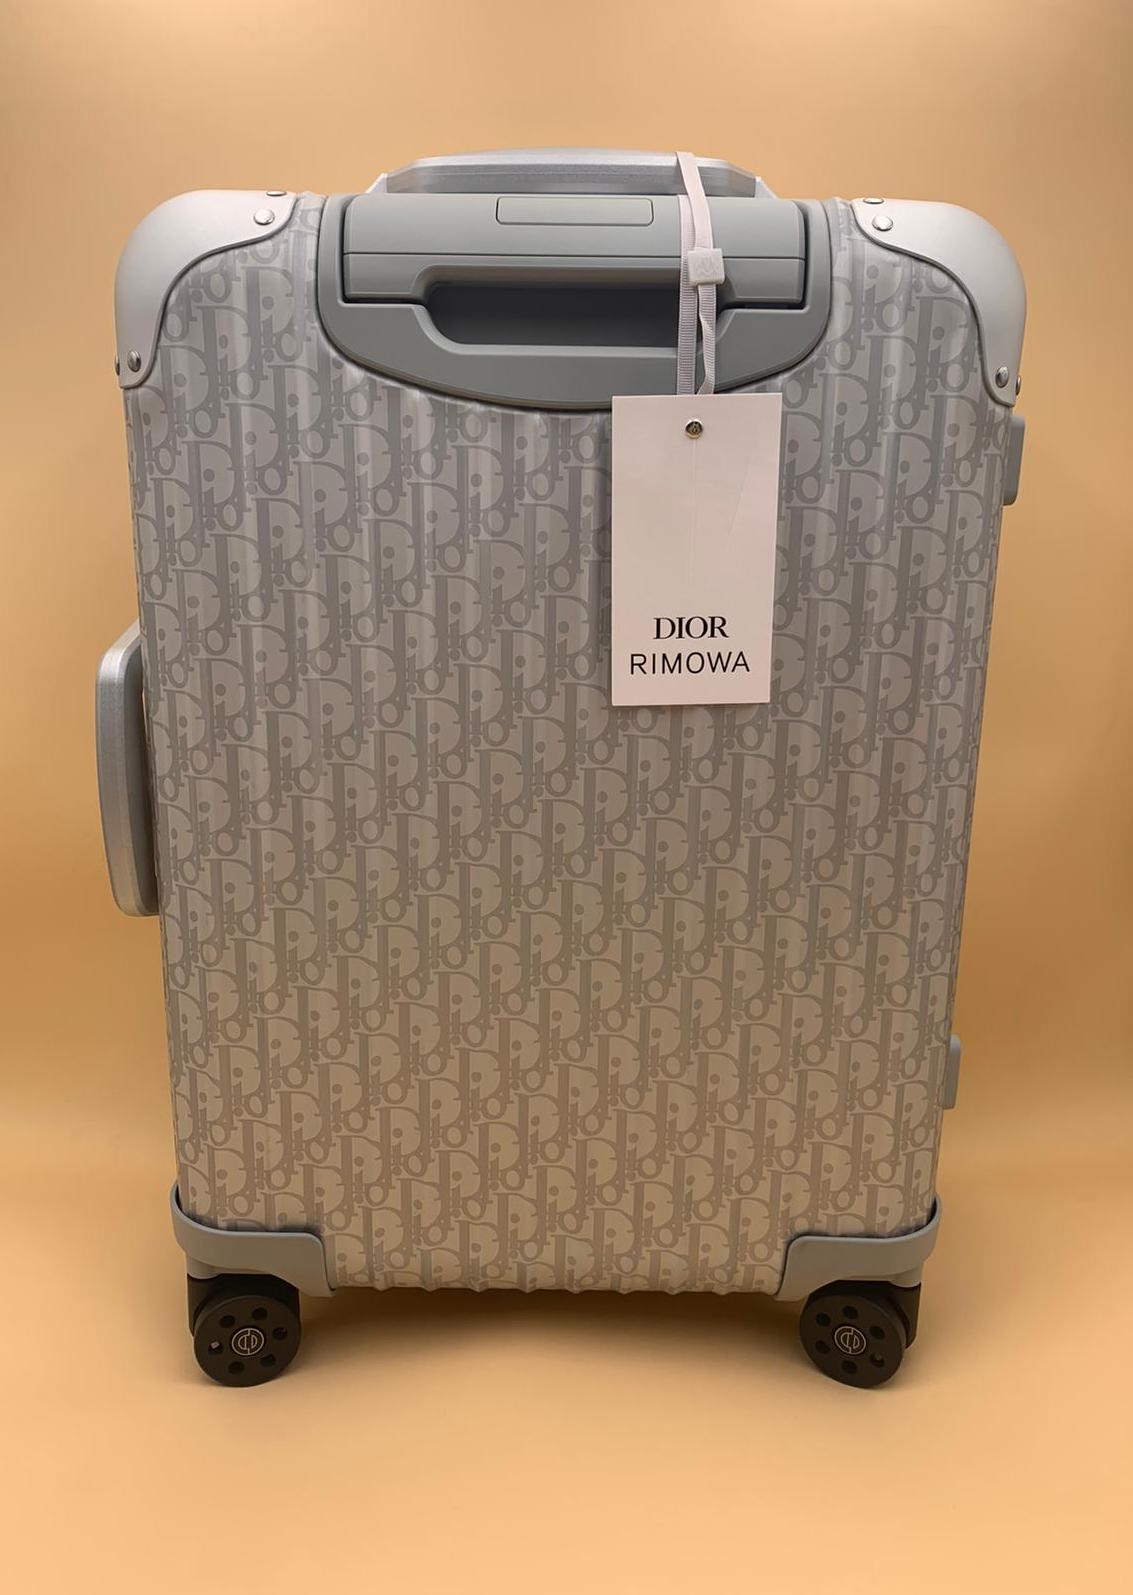 Authentic Dior by Kim Jones x Rimowa cabin size luggage